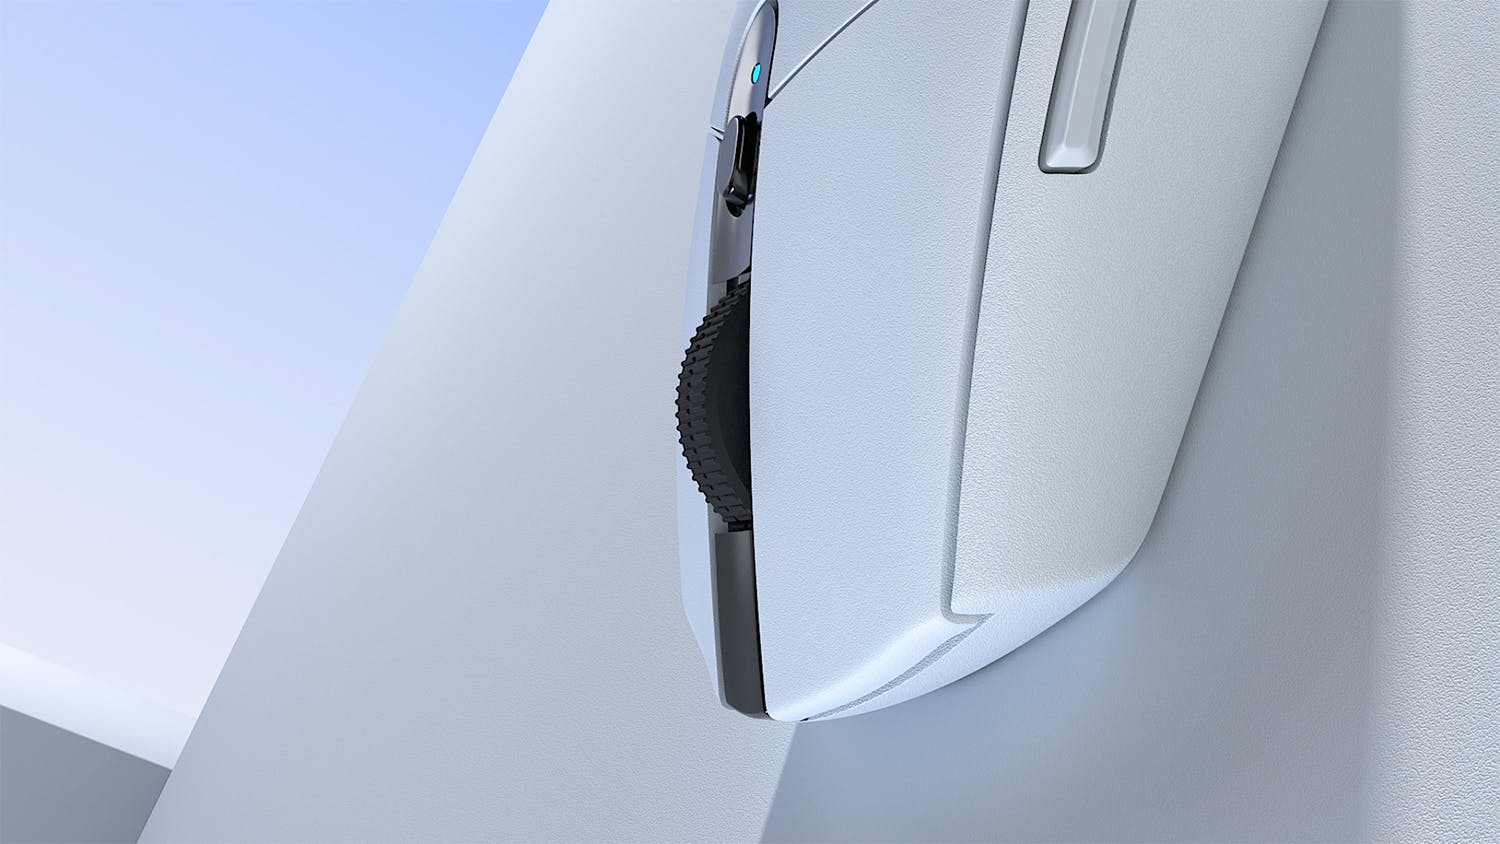 Logitech G305 LIGHTSPEED Wireless Gaming Mouse - White